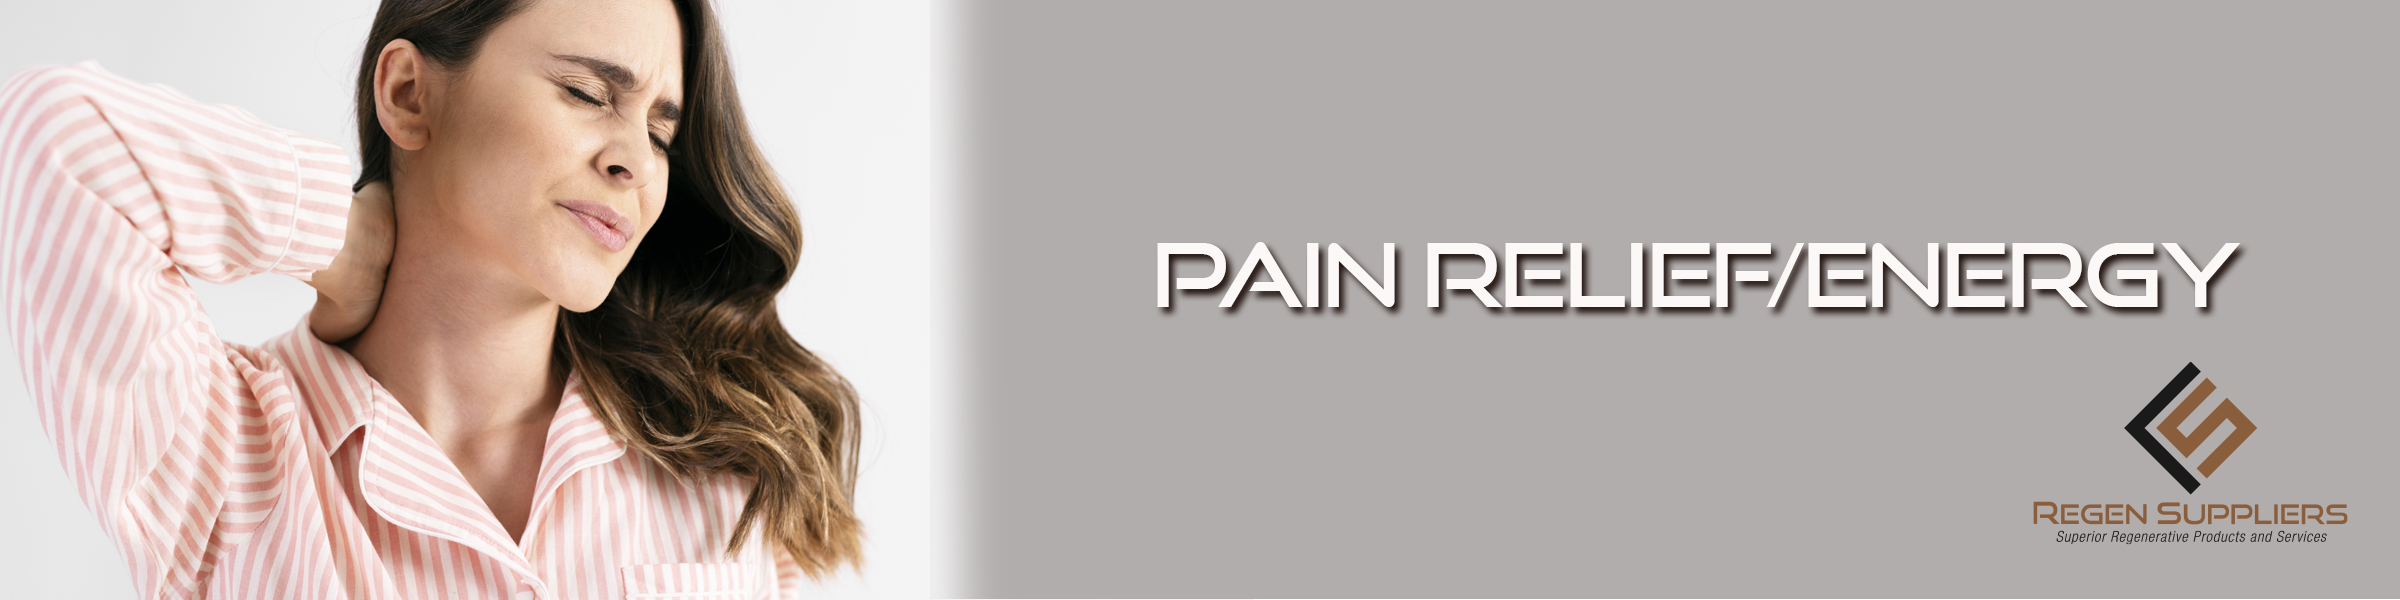 Pain Relief/Energy